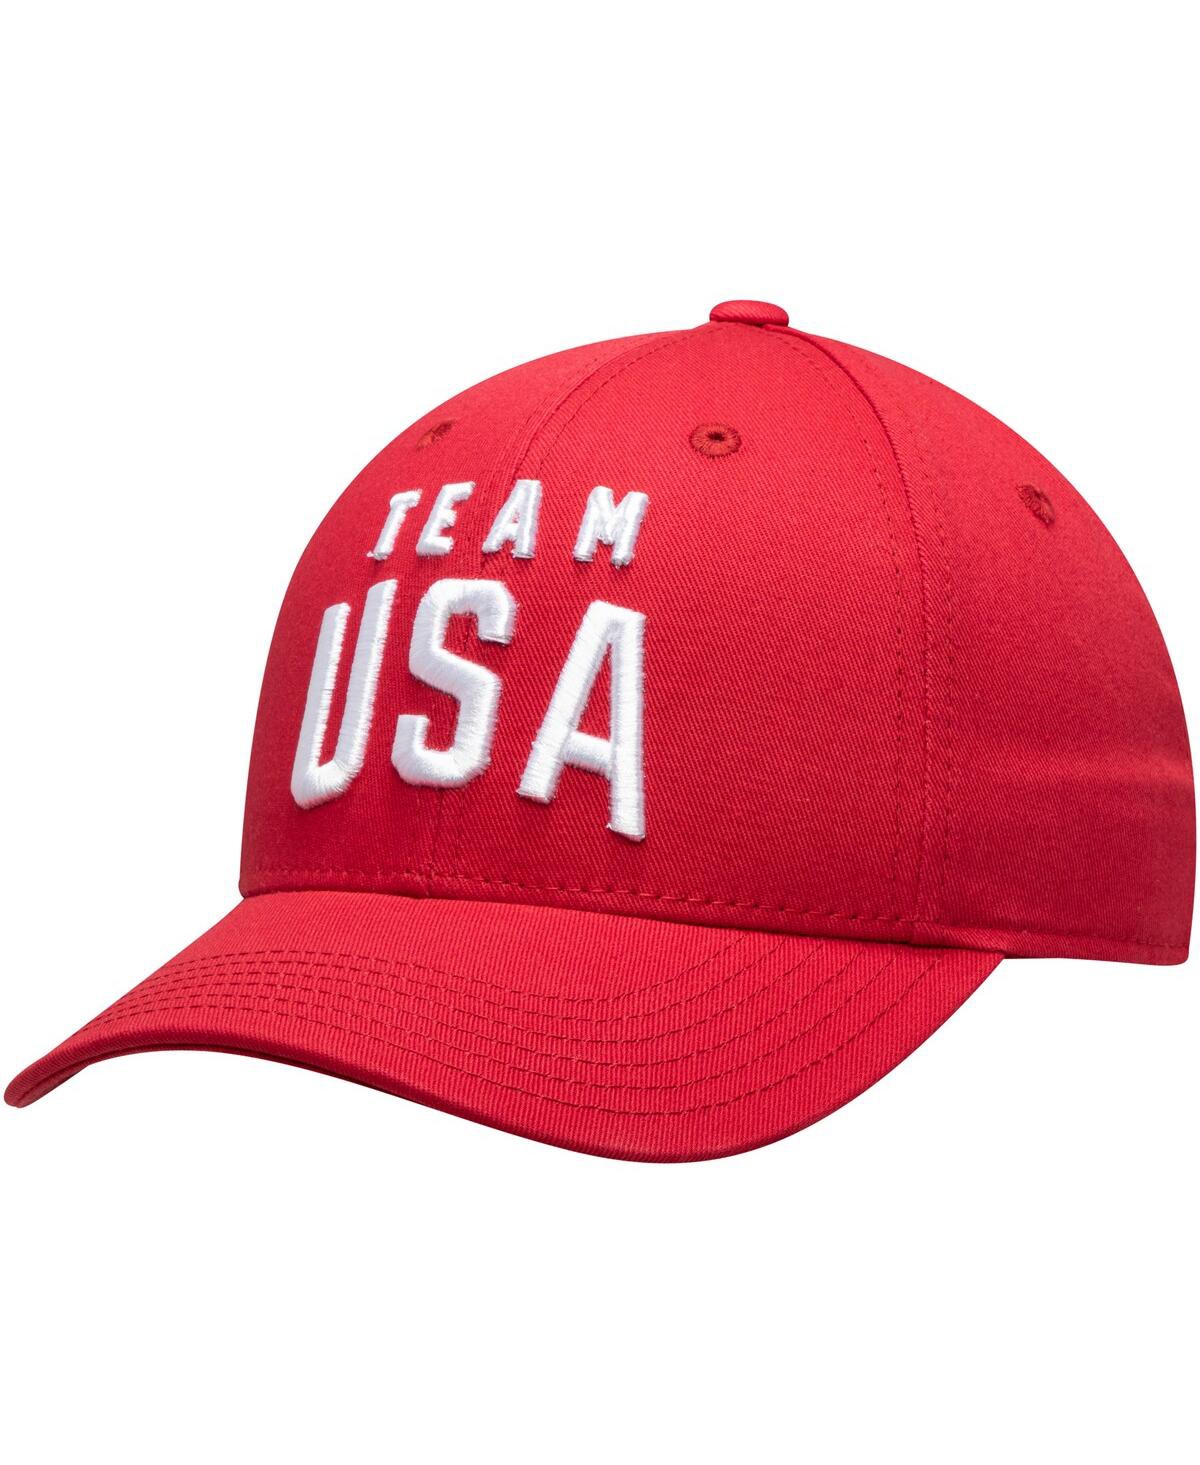 Outerstuff Kids' Big Boys Red Team Usa New Logo Solid Structured Adjustable Snapback Hat